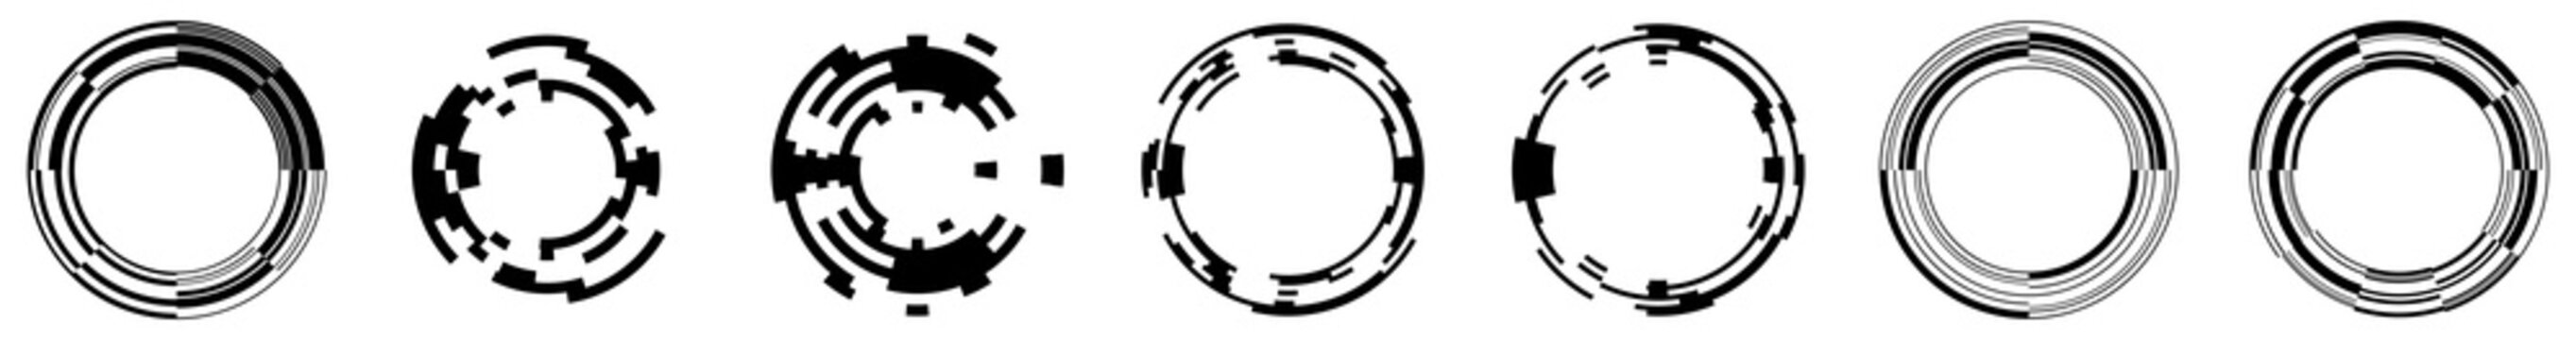 Abstract GUI, UI geometric circle element